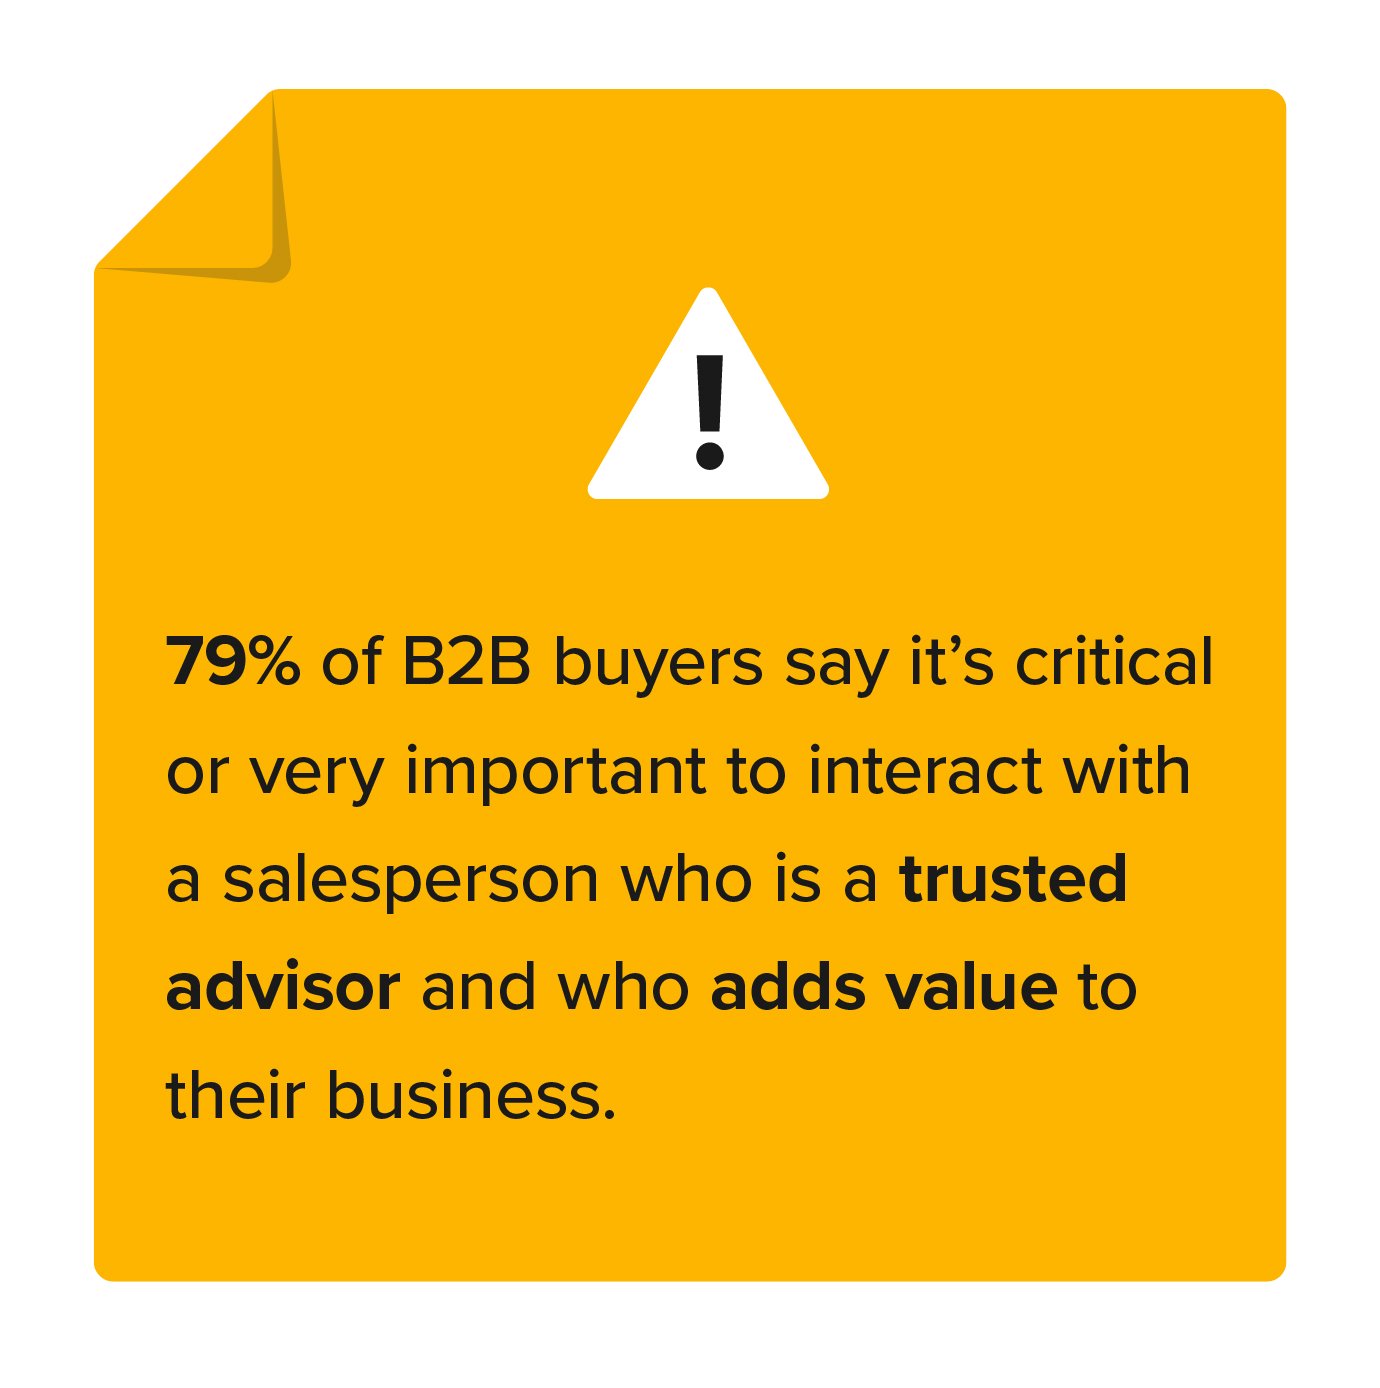 B2B buyers want trusted advisors